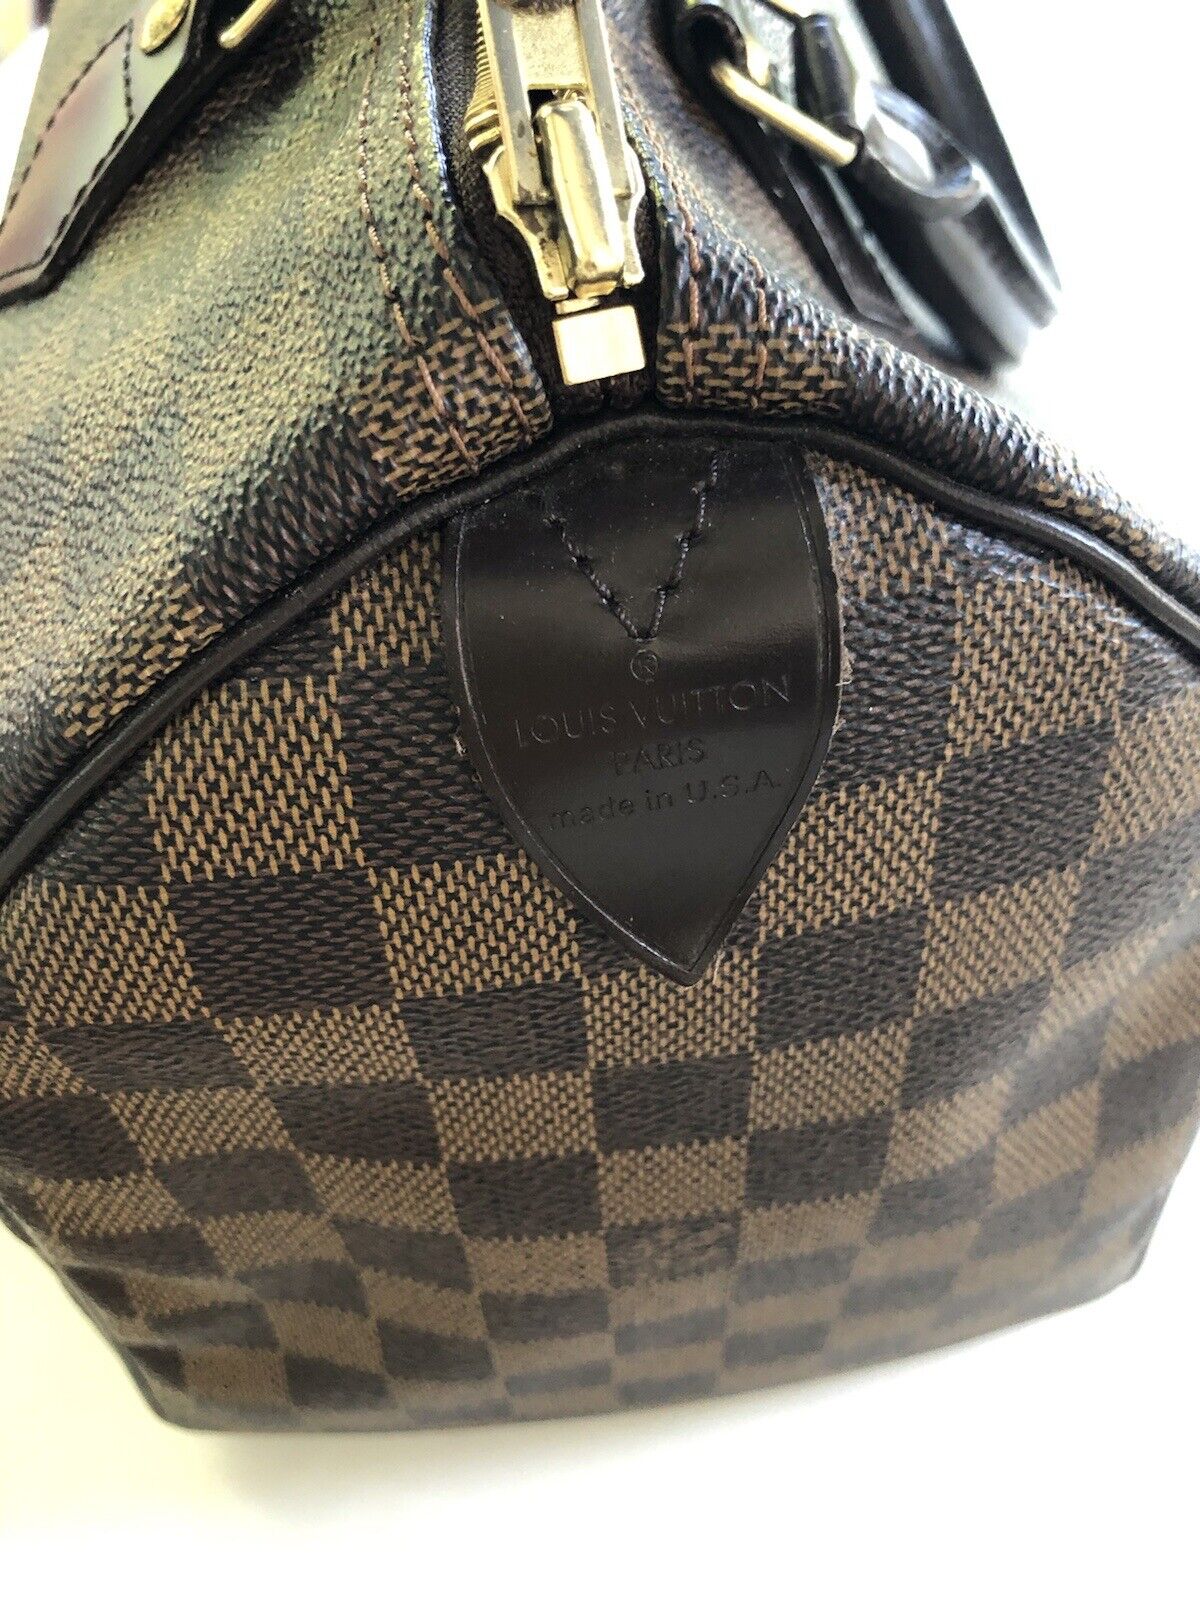 Louis Vuitton Damier Checks Speedy 30 Bag RT110-10